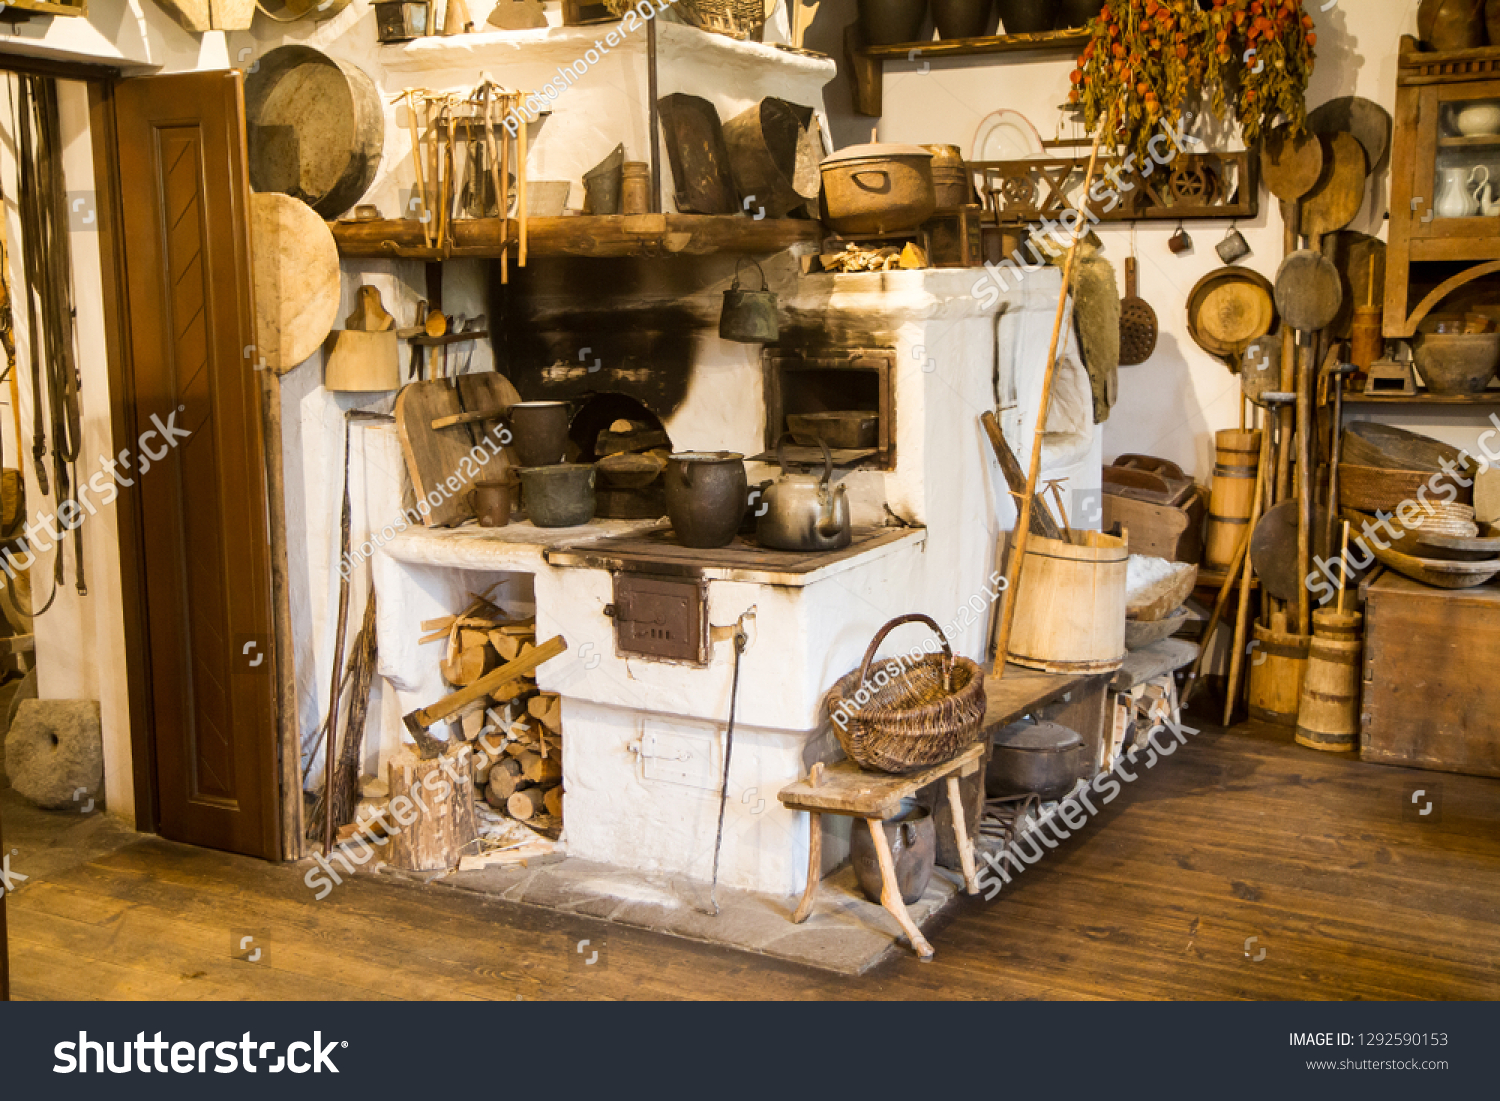 Stock Photo Interior Of A Vintage Kitchen 1292590153 